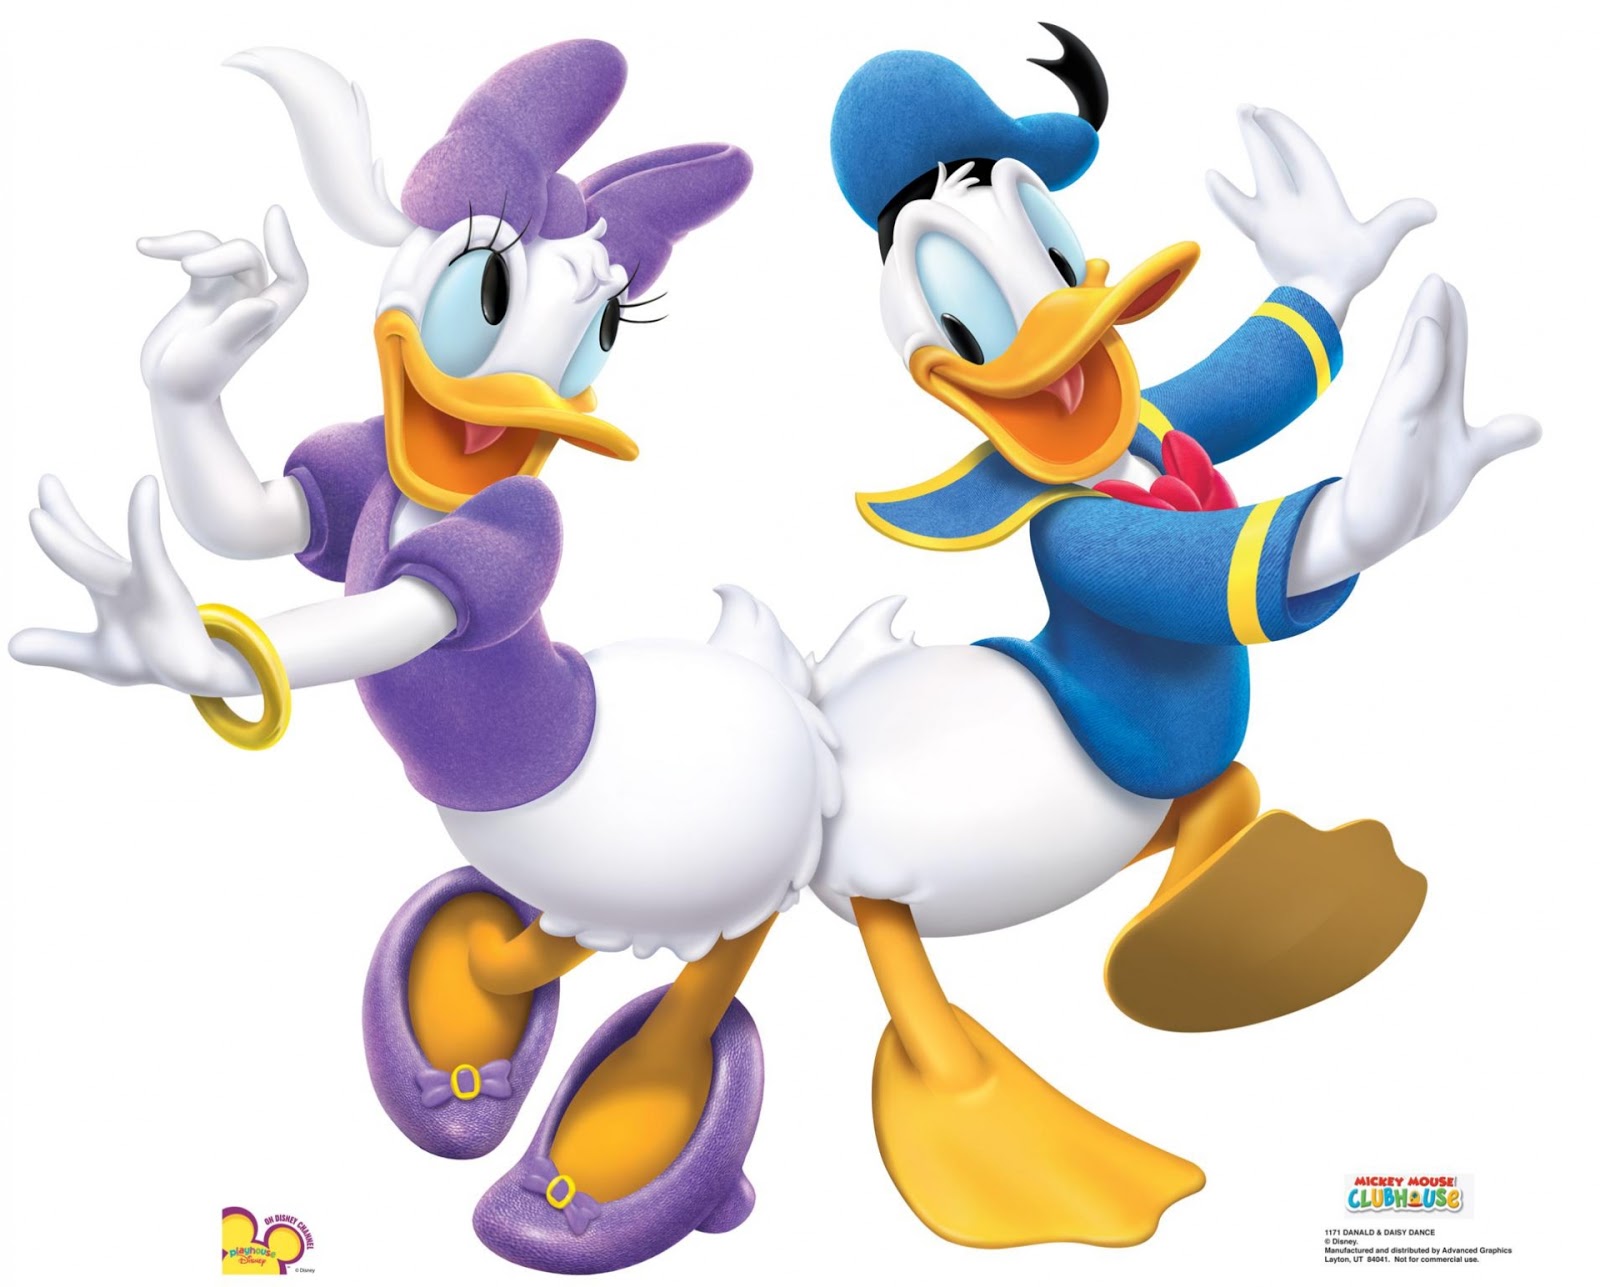 American top cartoons: Donald duck